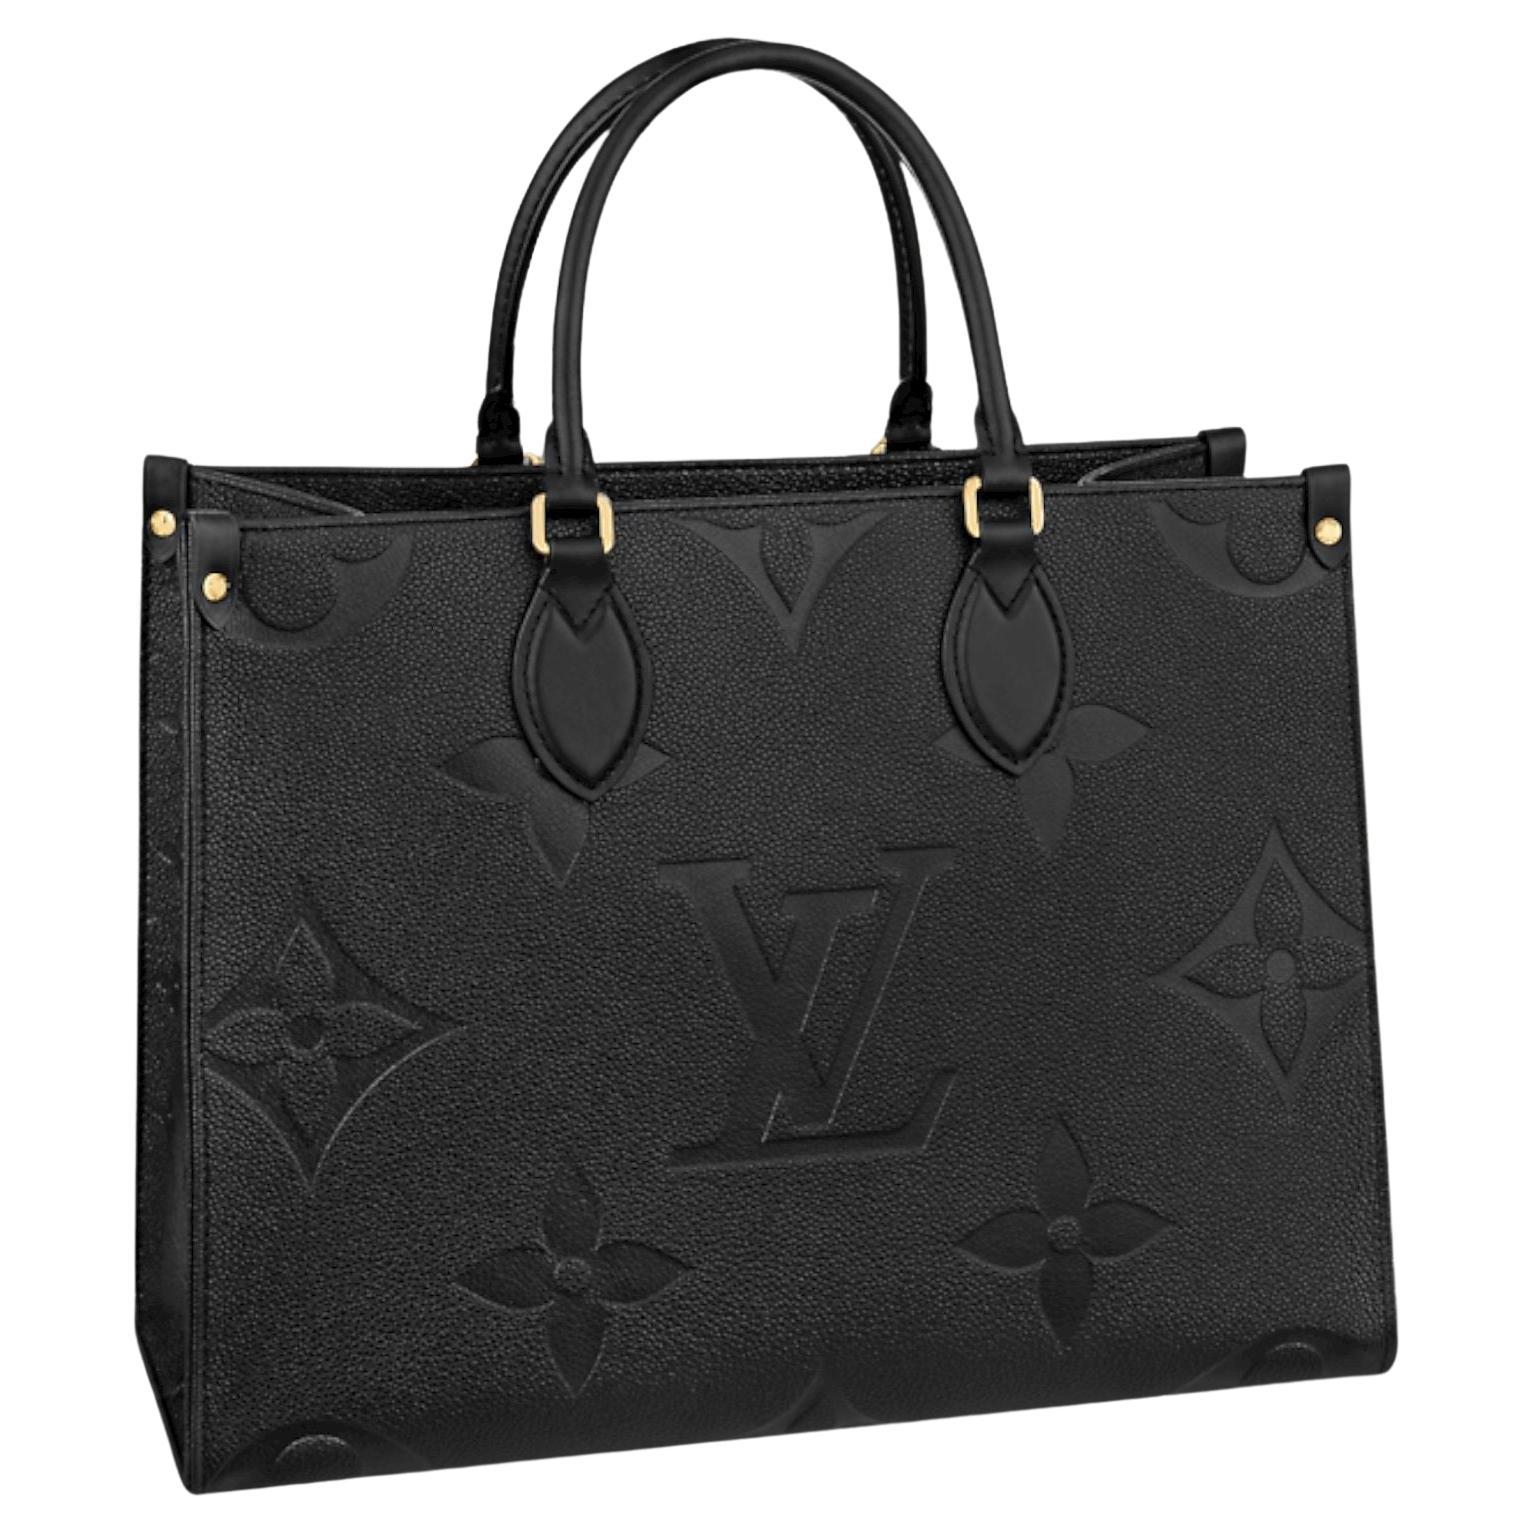 Buy LOUIS VUITTON tote bag M43416 13921 black [USED] from Japan